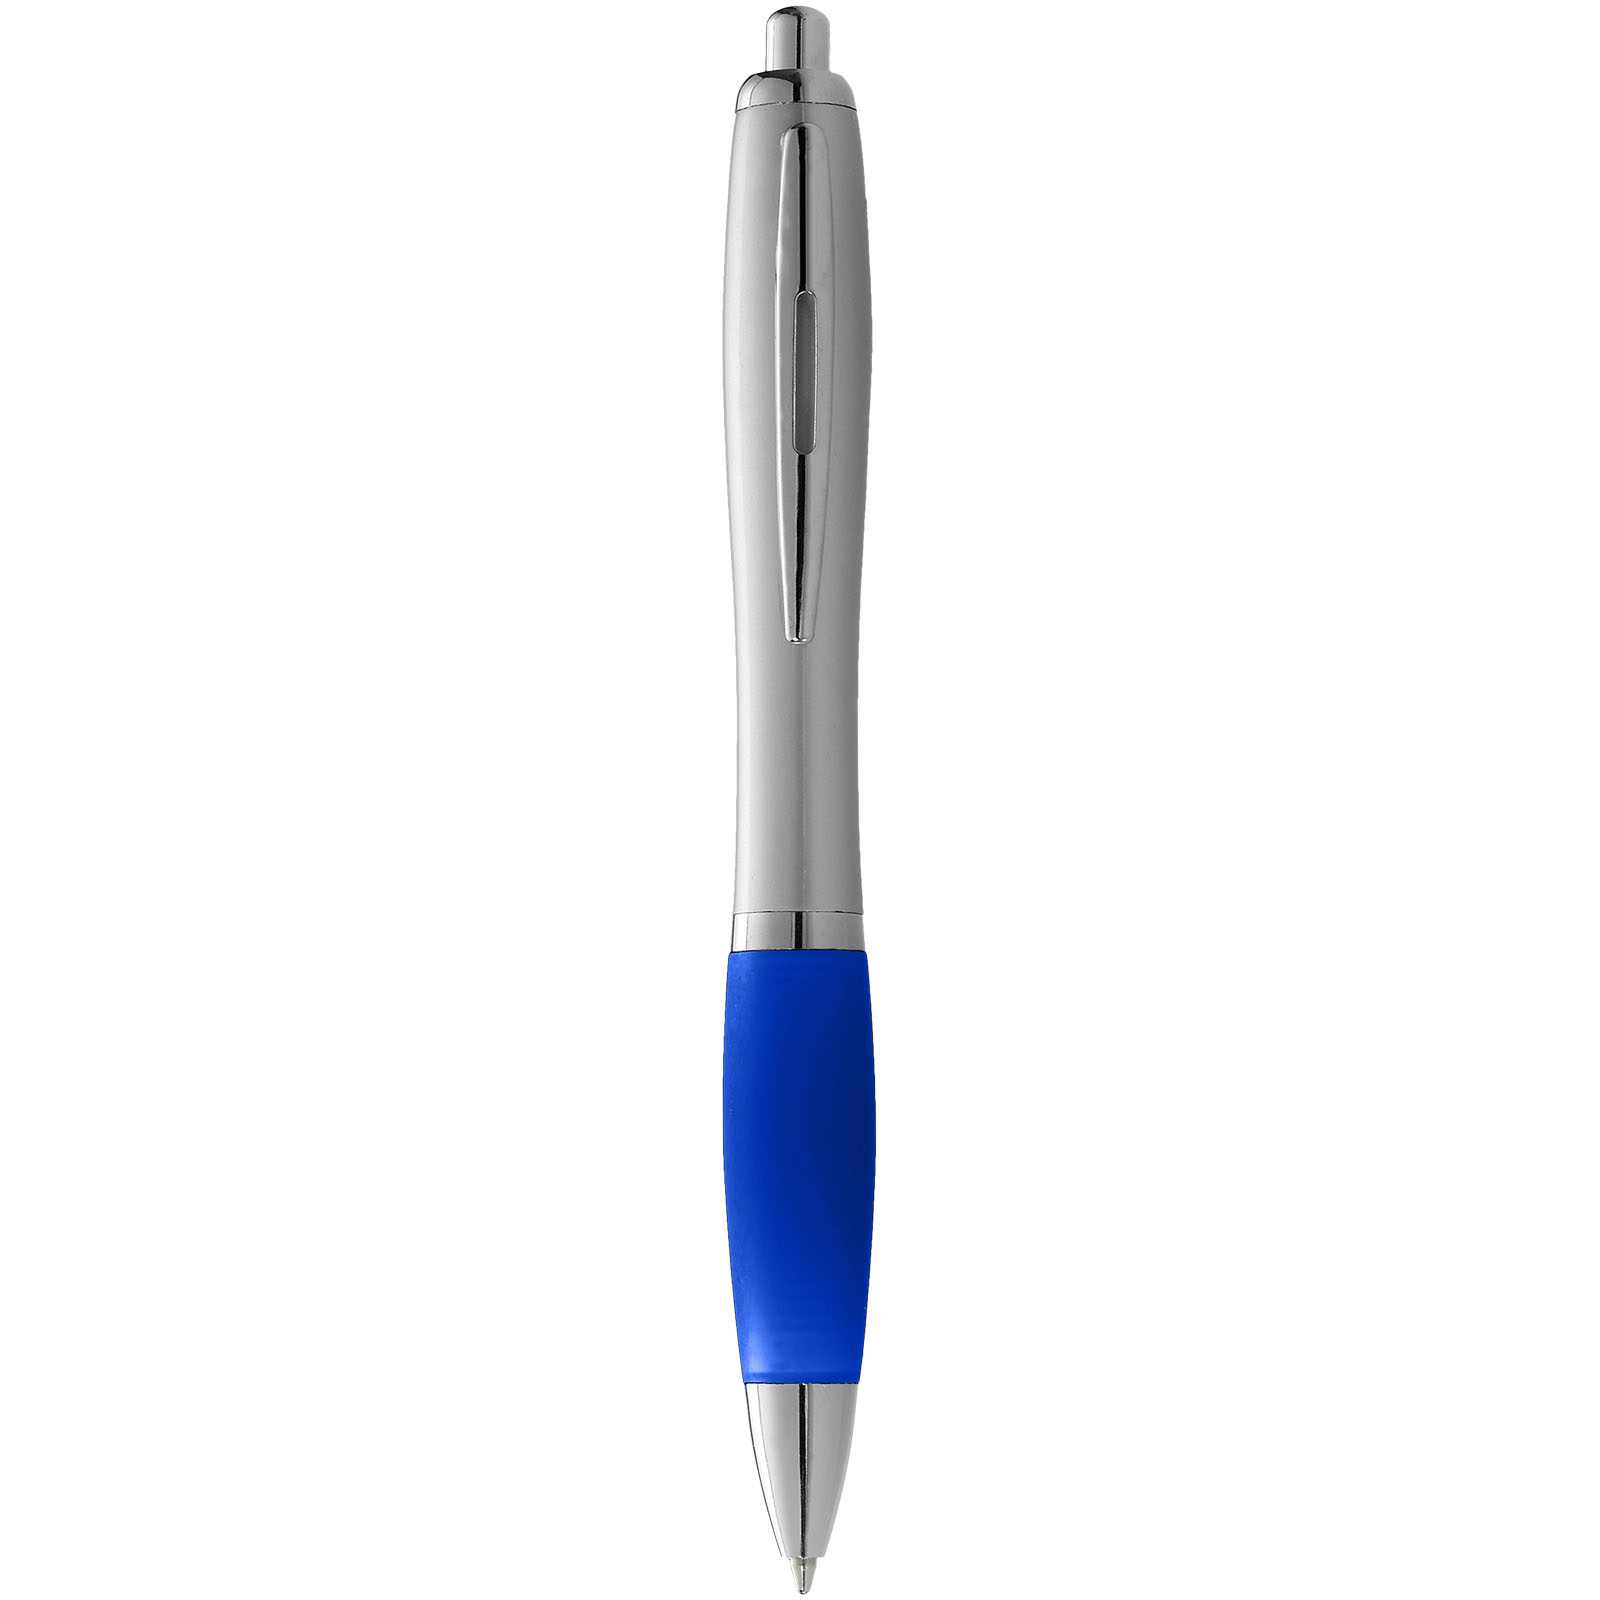 Advertising Ballpoint Pens - Nash ballpoint pen with silver barrel and coloured grip - 1